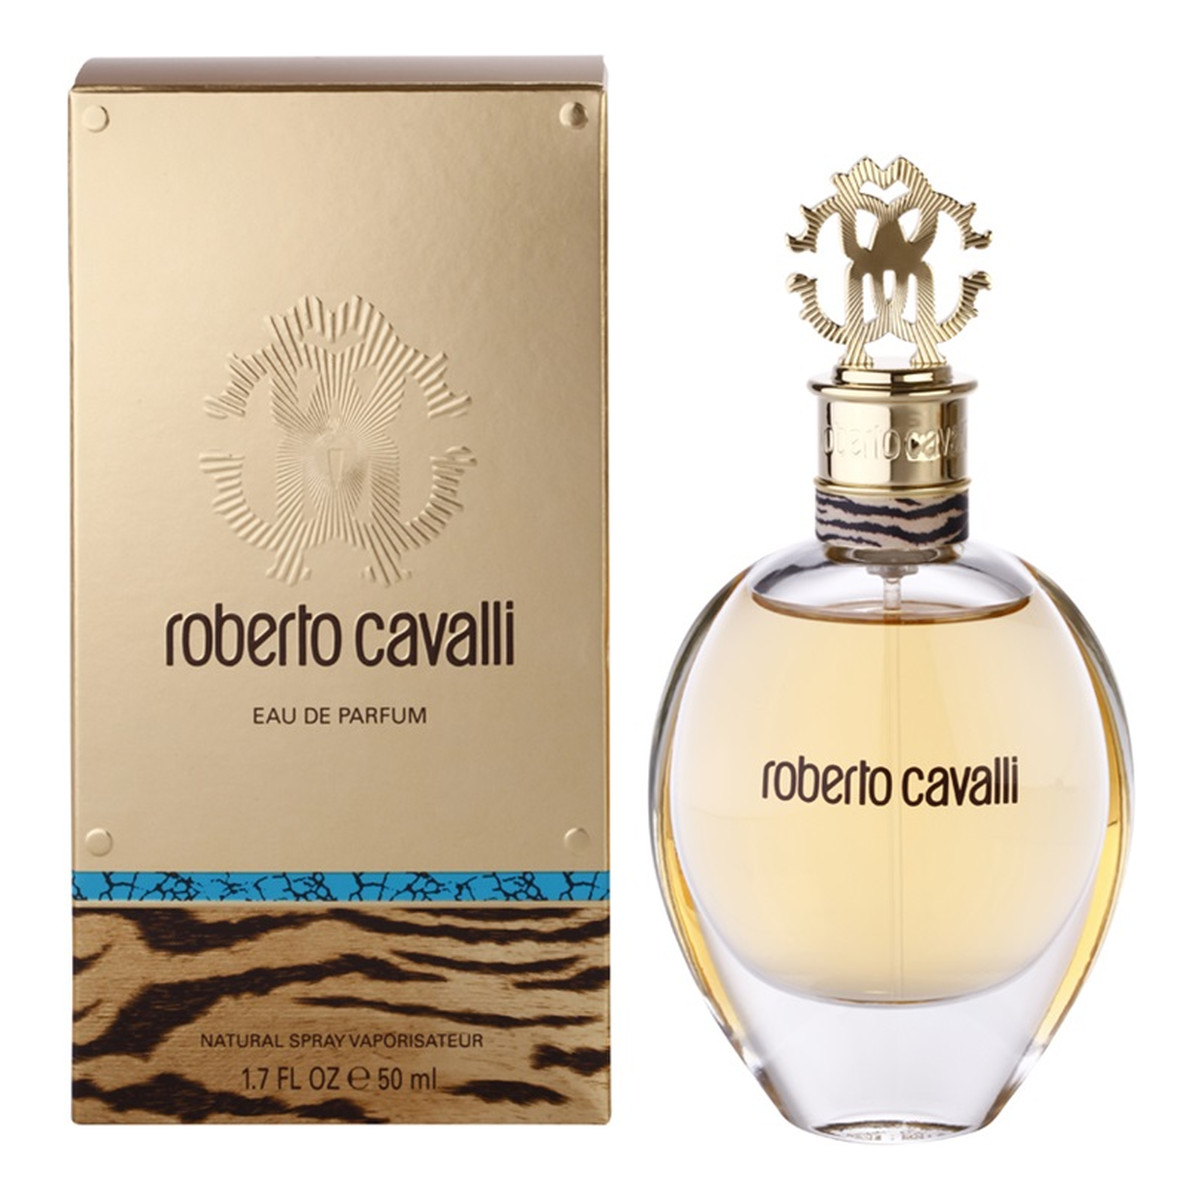 Roberto Cavalli Woda perfumowana 75ml